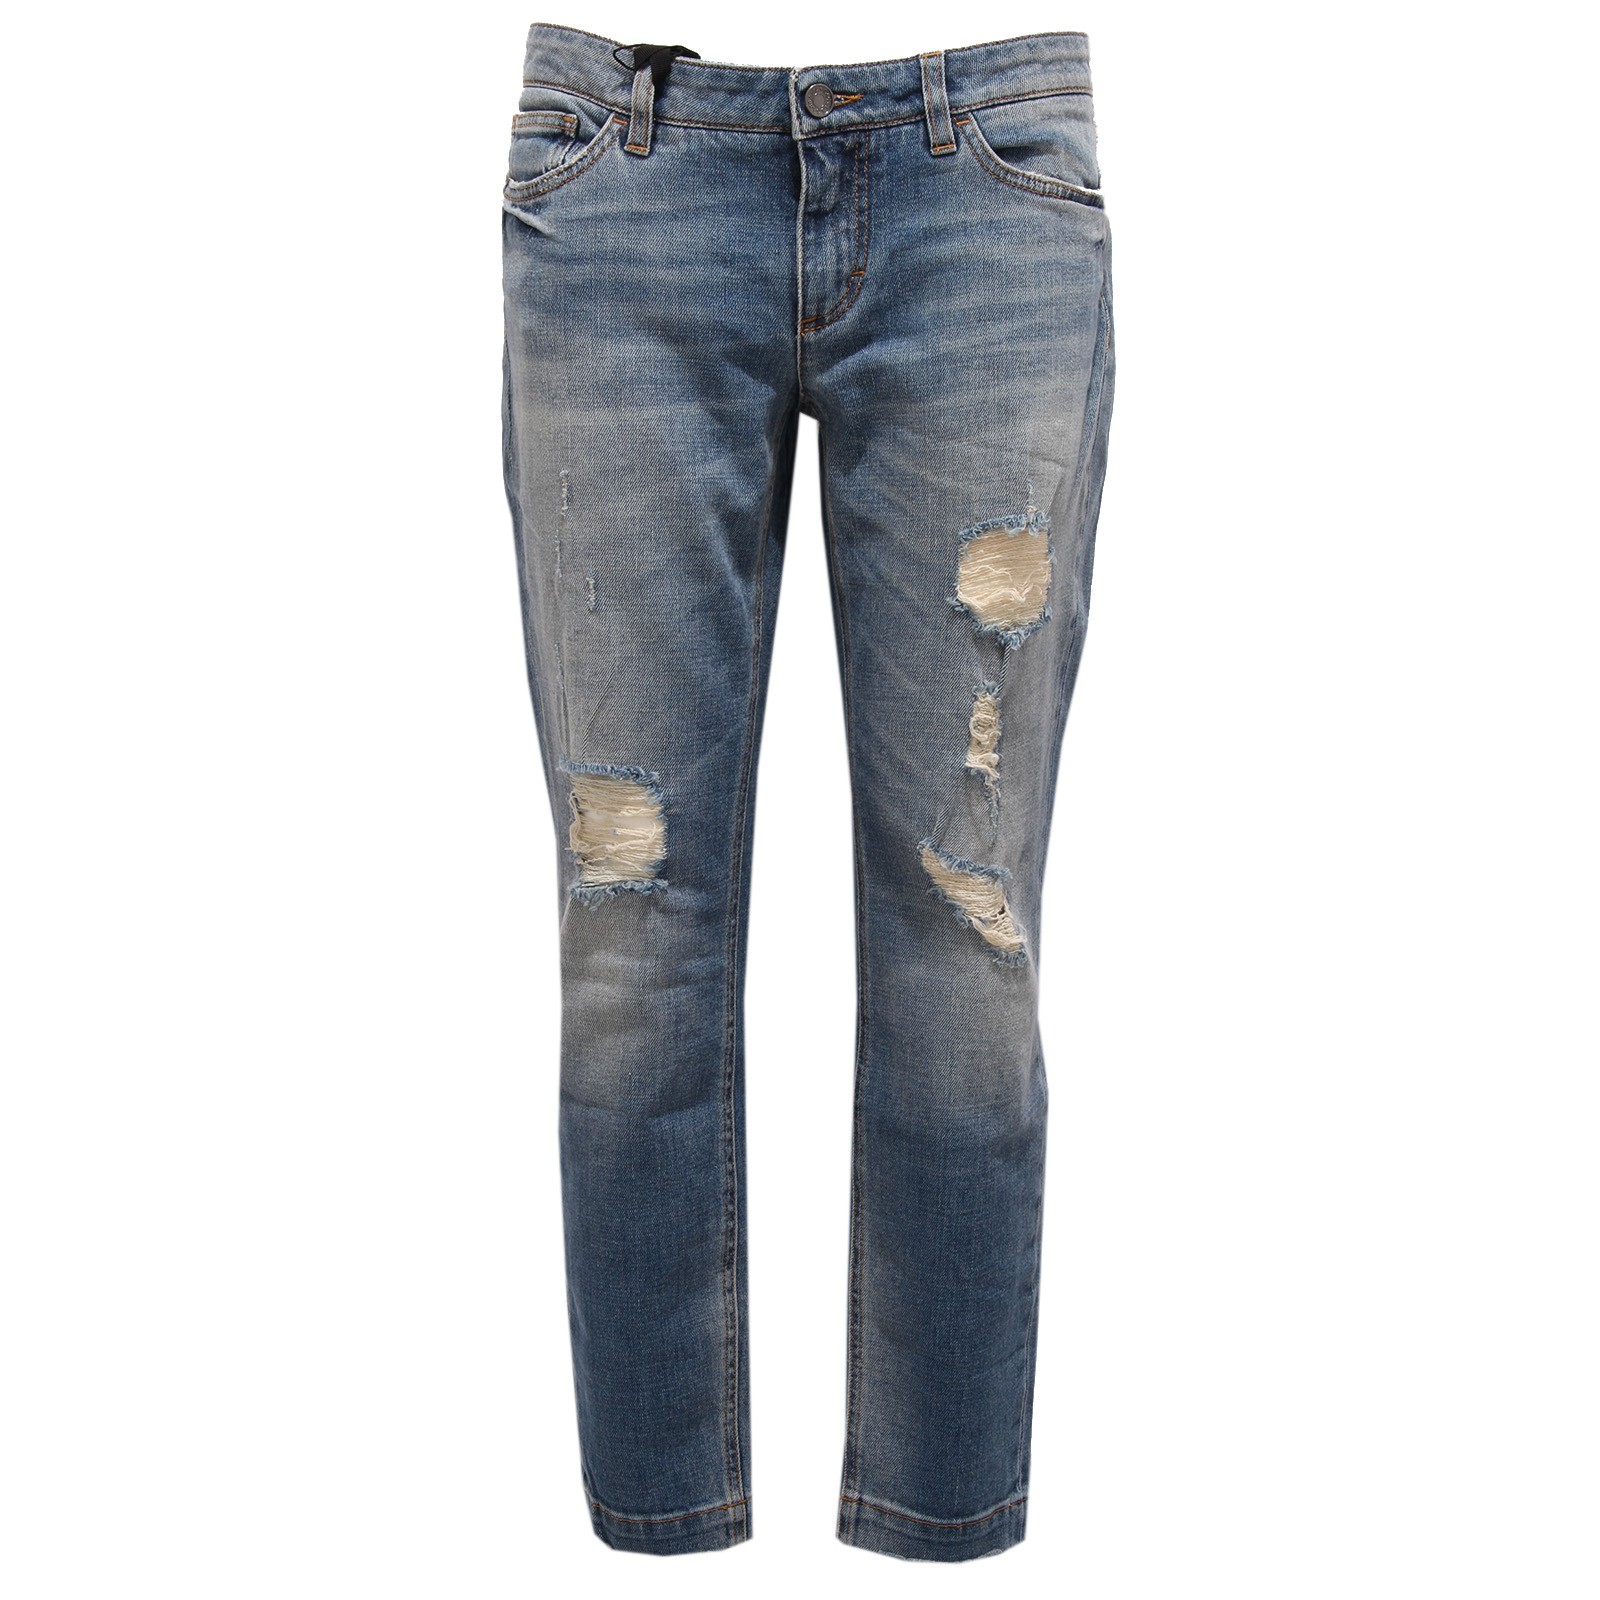 Acquisition Harmony Allergic 1880Z jeans donna DOLCE & GABBANA PRETTY DENIM FIT blue pants woman | eBay